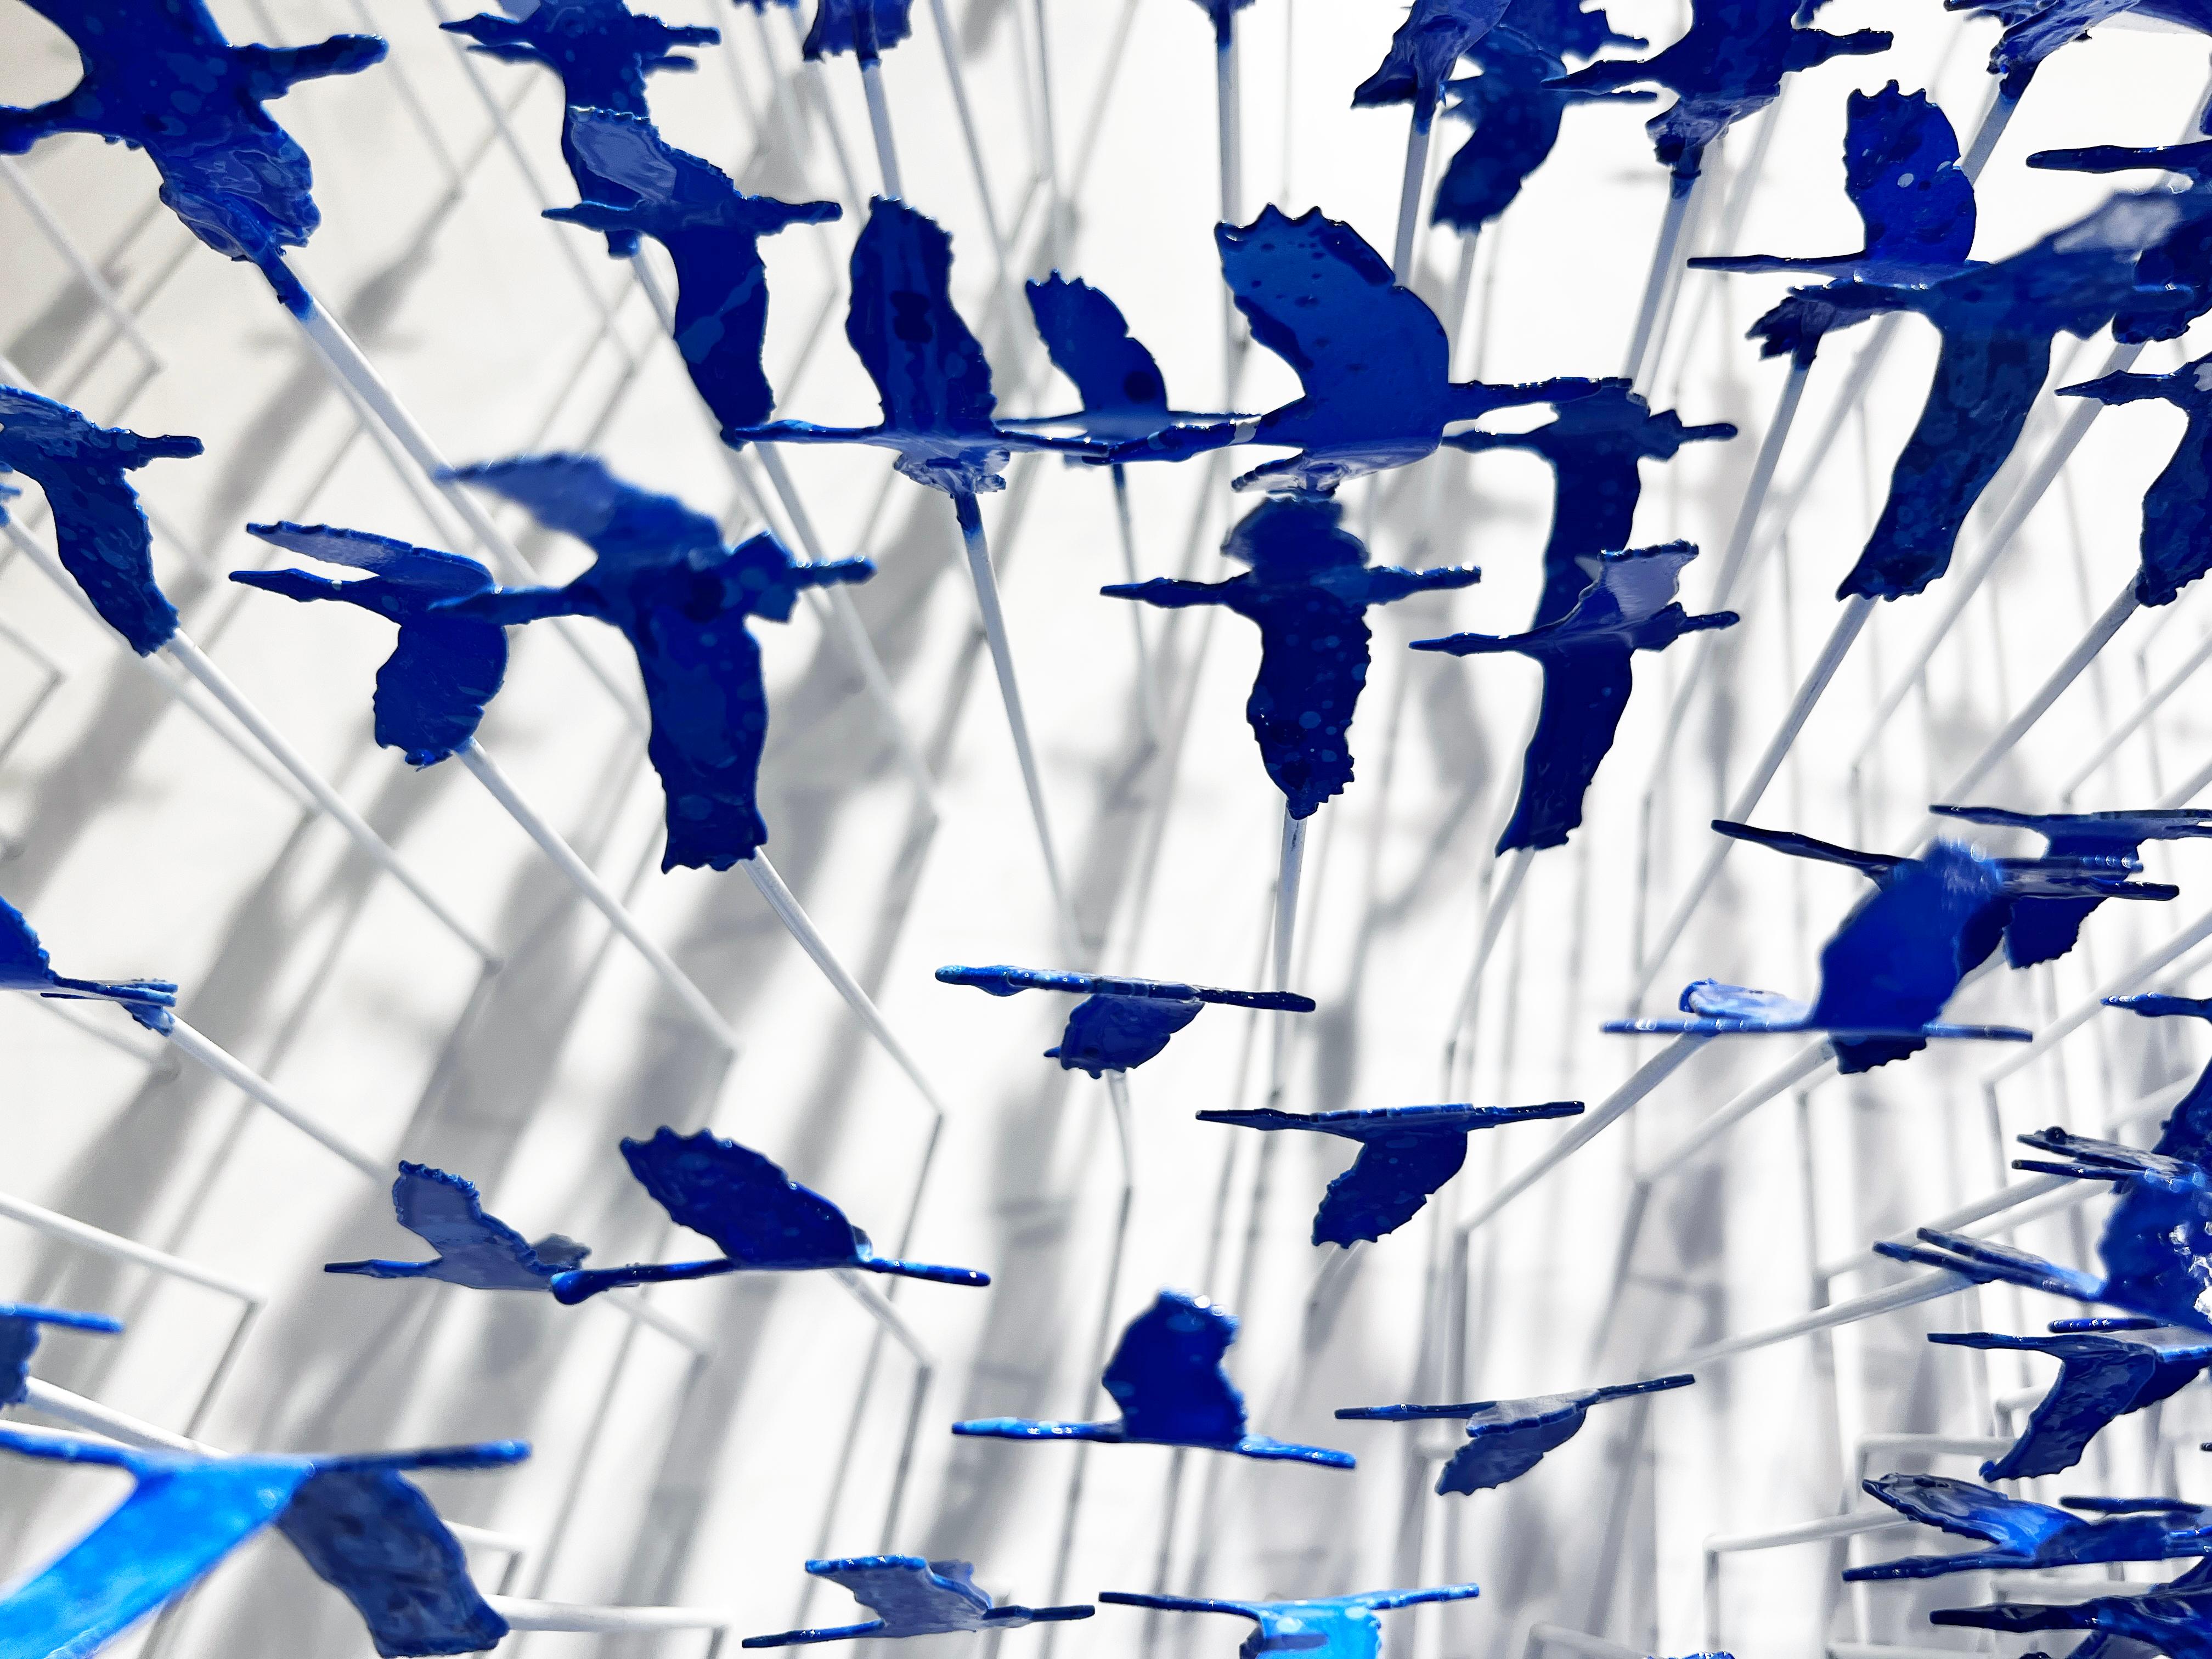 Galaxy of Birds (Blue), Mixed Media Metal Wall Sculpture - Contemporary Mixed Media Art by Joel Amit